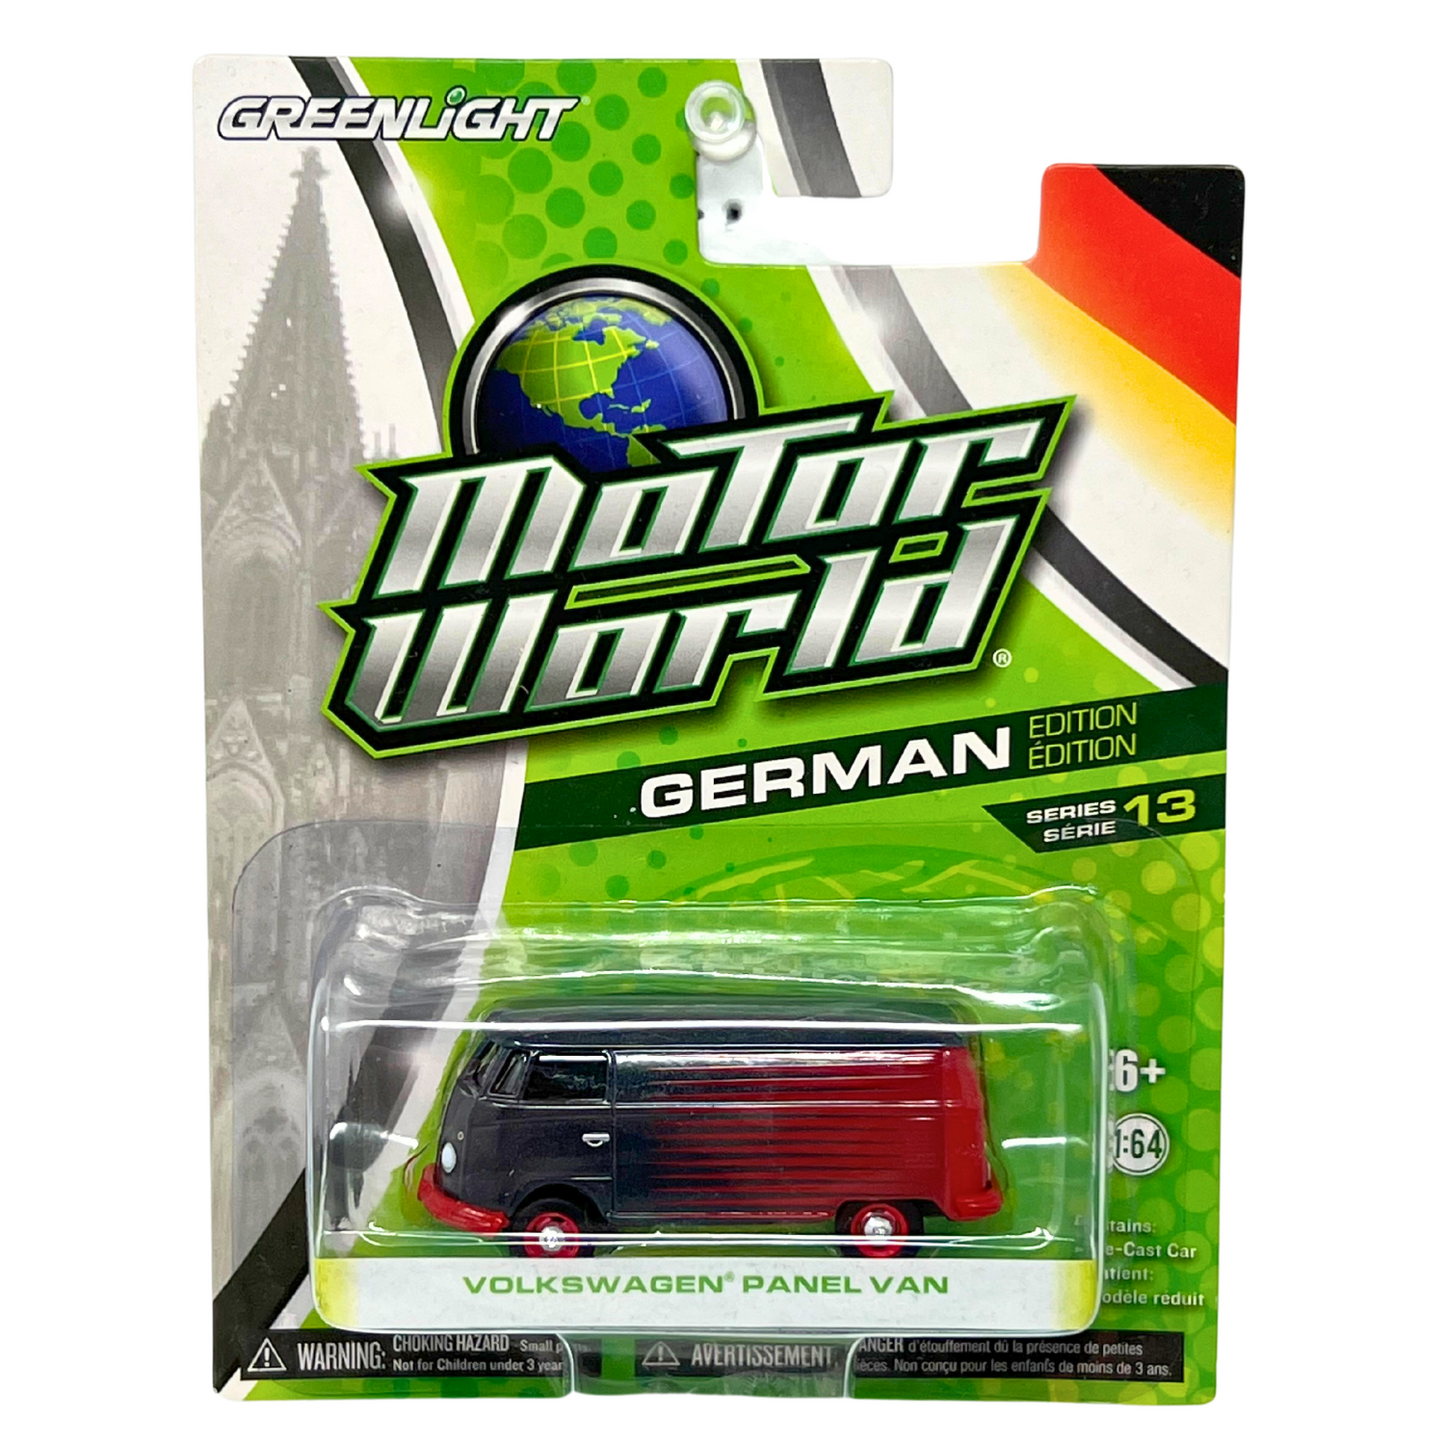 Greenlight Motor World German Edition Volkswagen Panel Van 1:64 Diecast